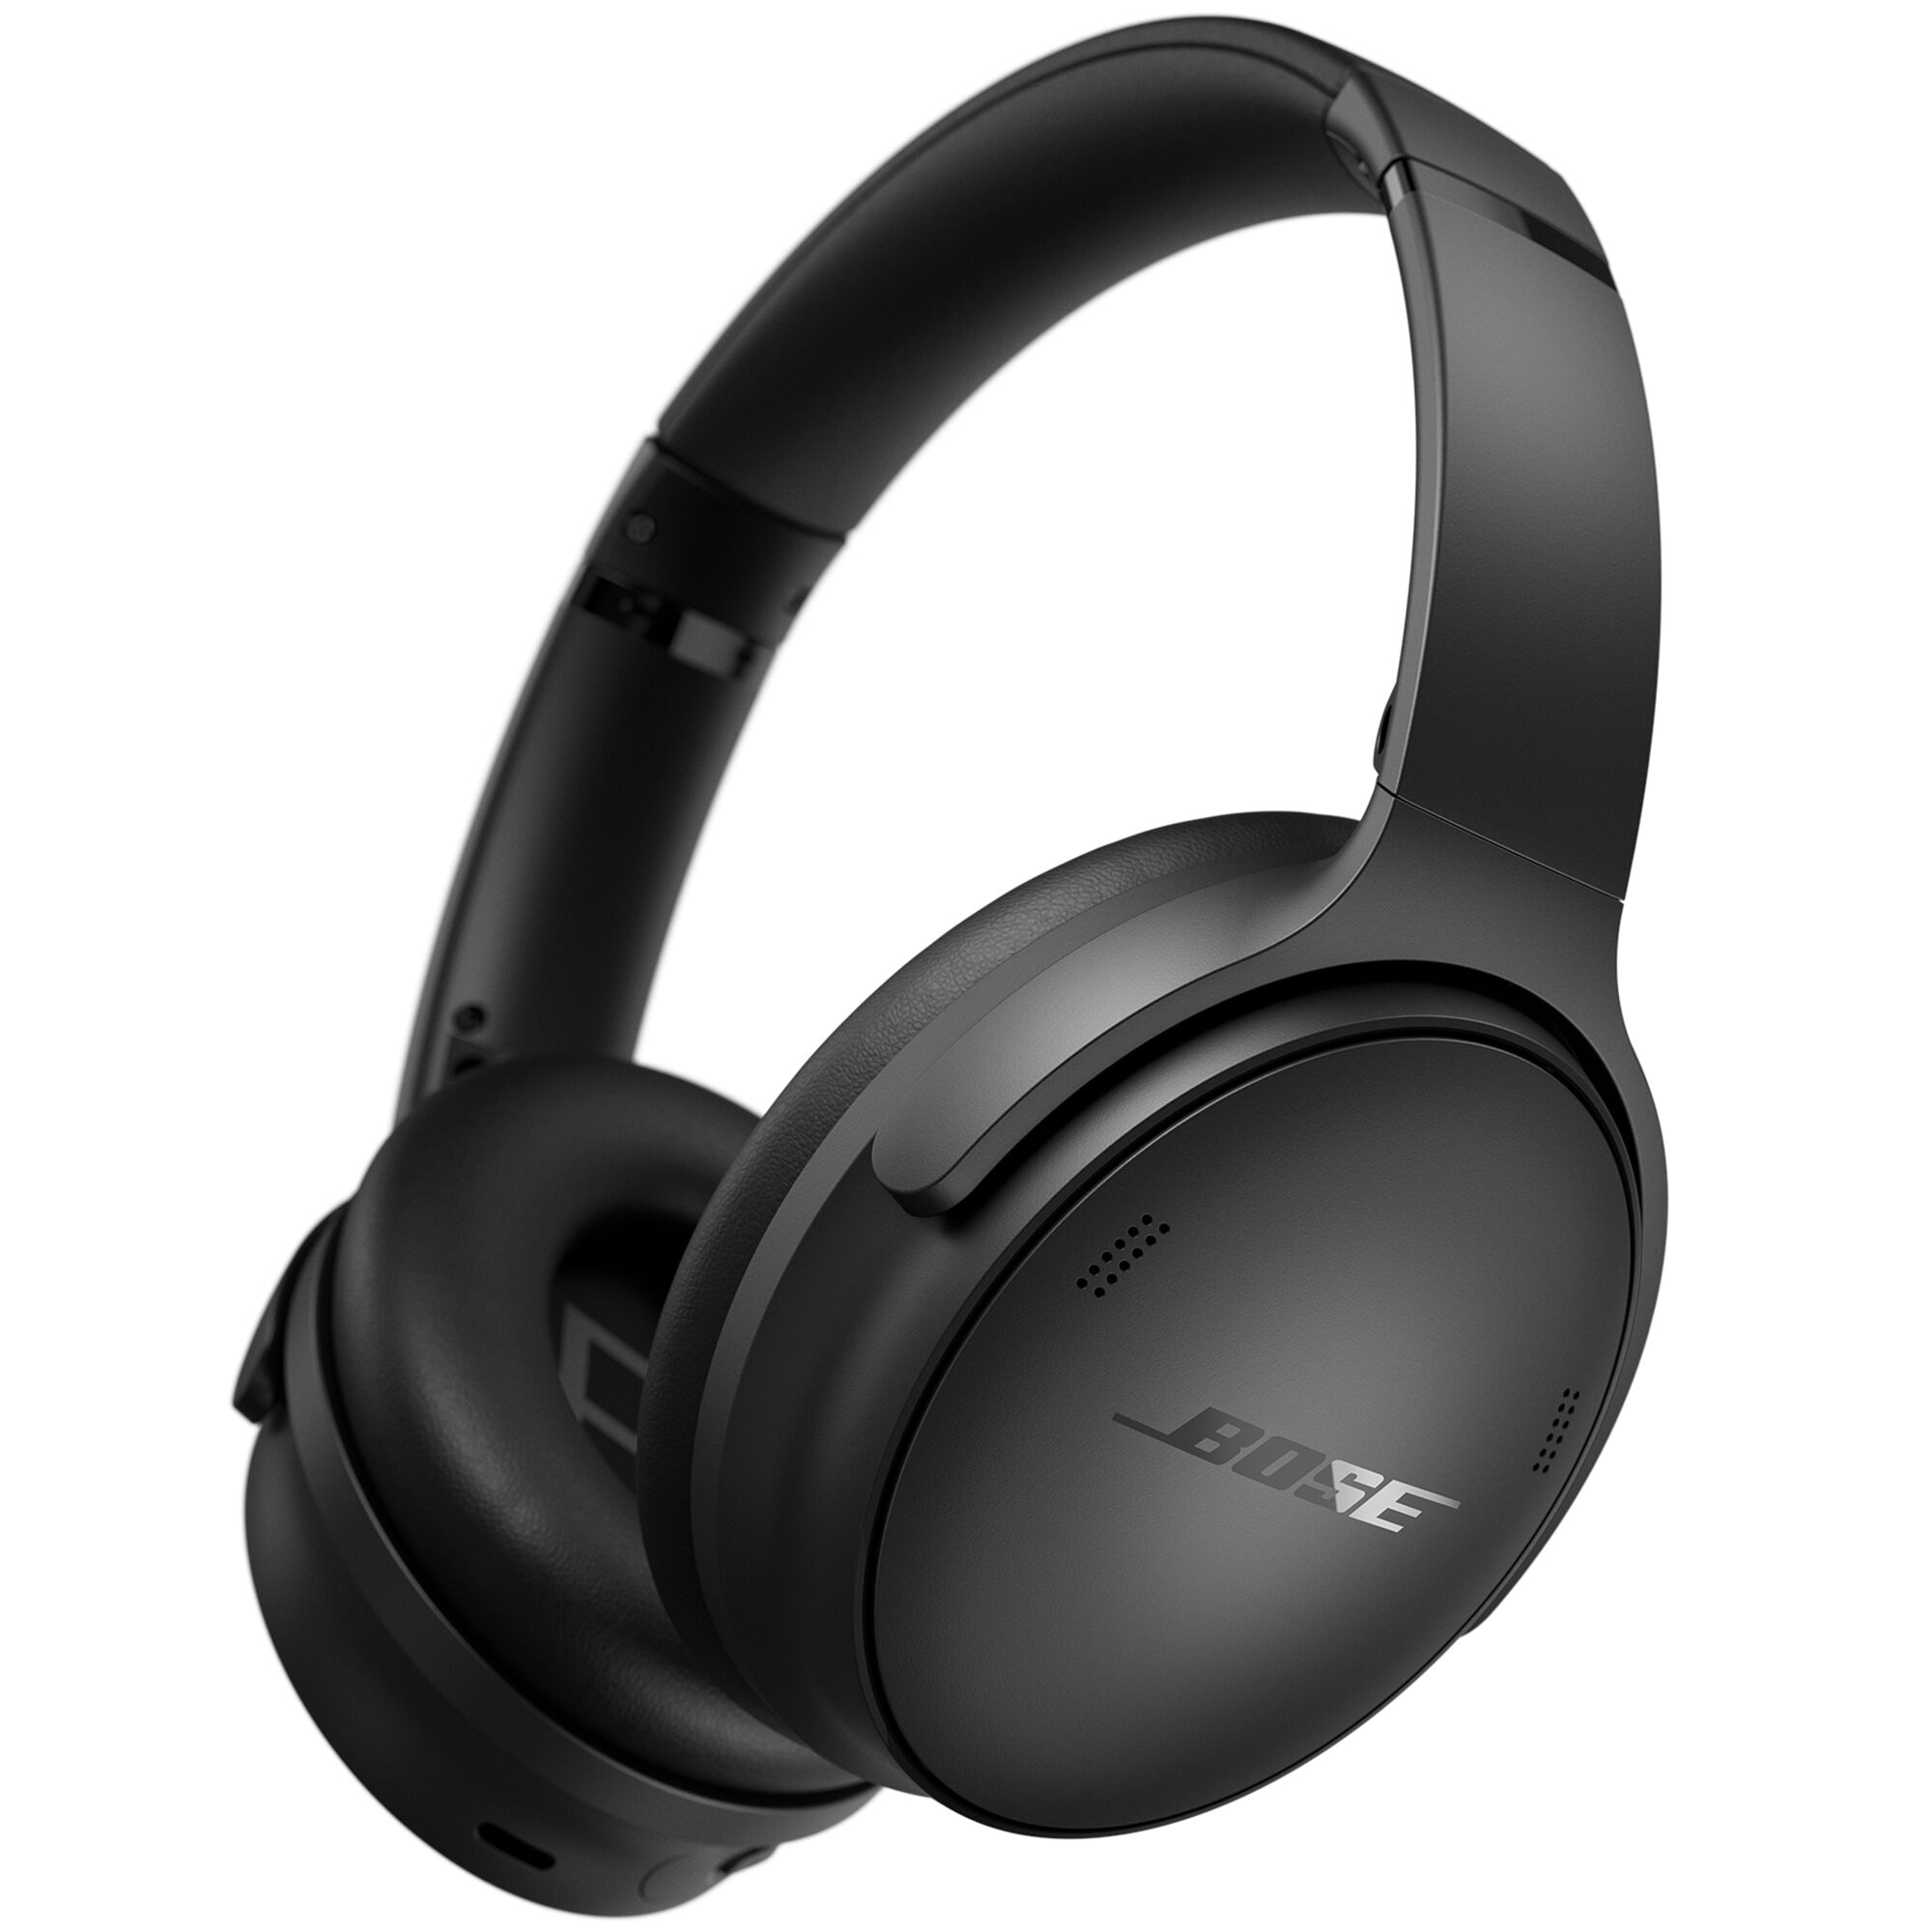 New Bose Quiet Comfort Headphones - Black | P.C. Richard & Son